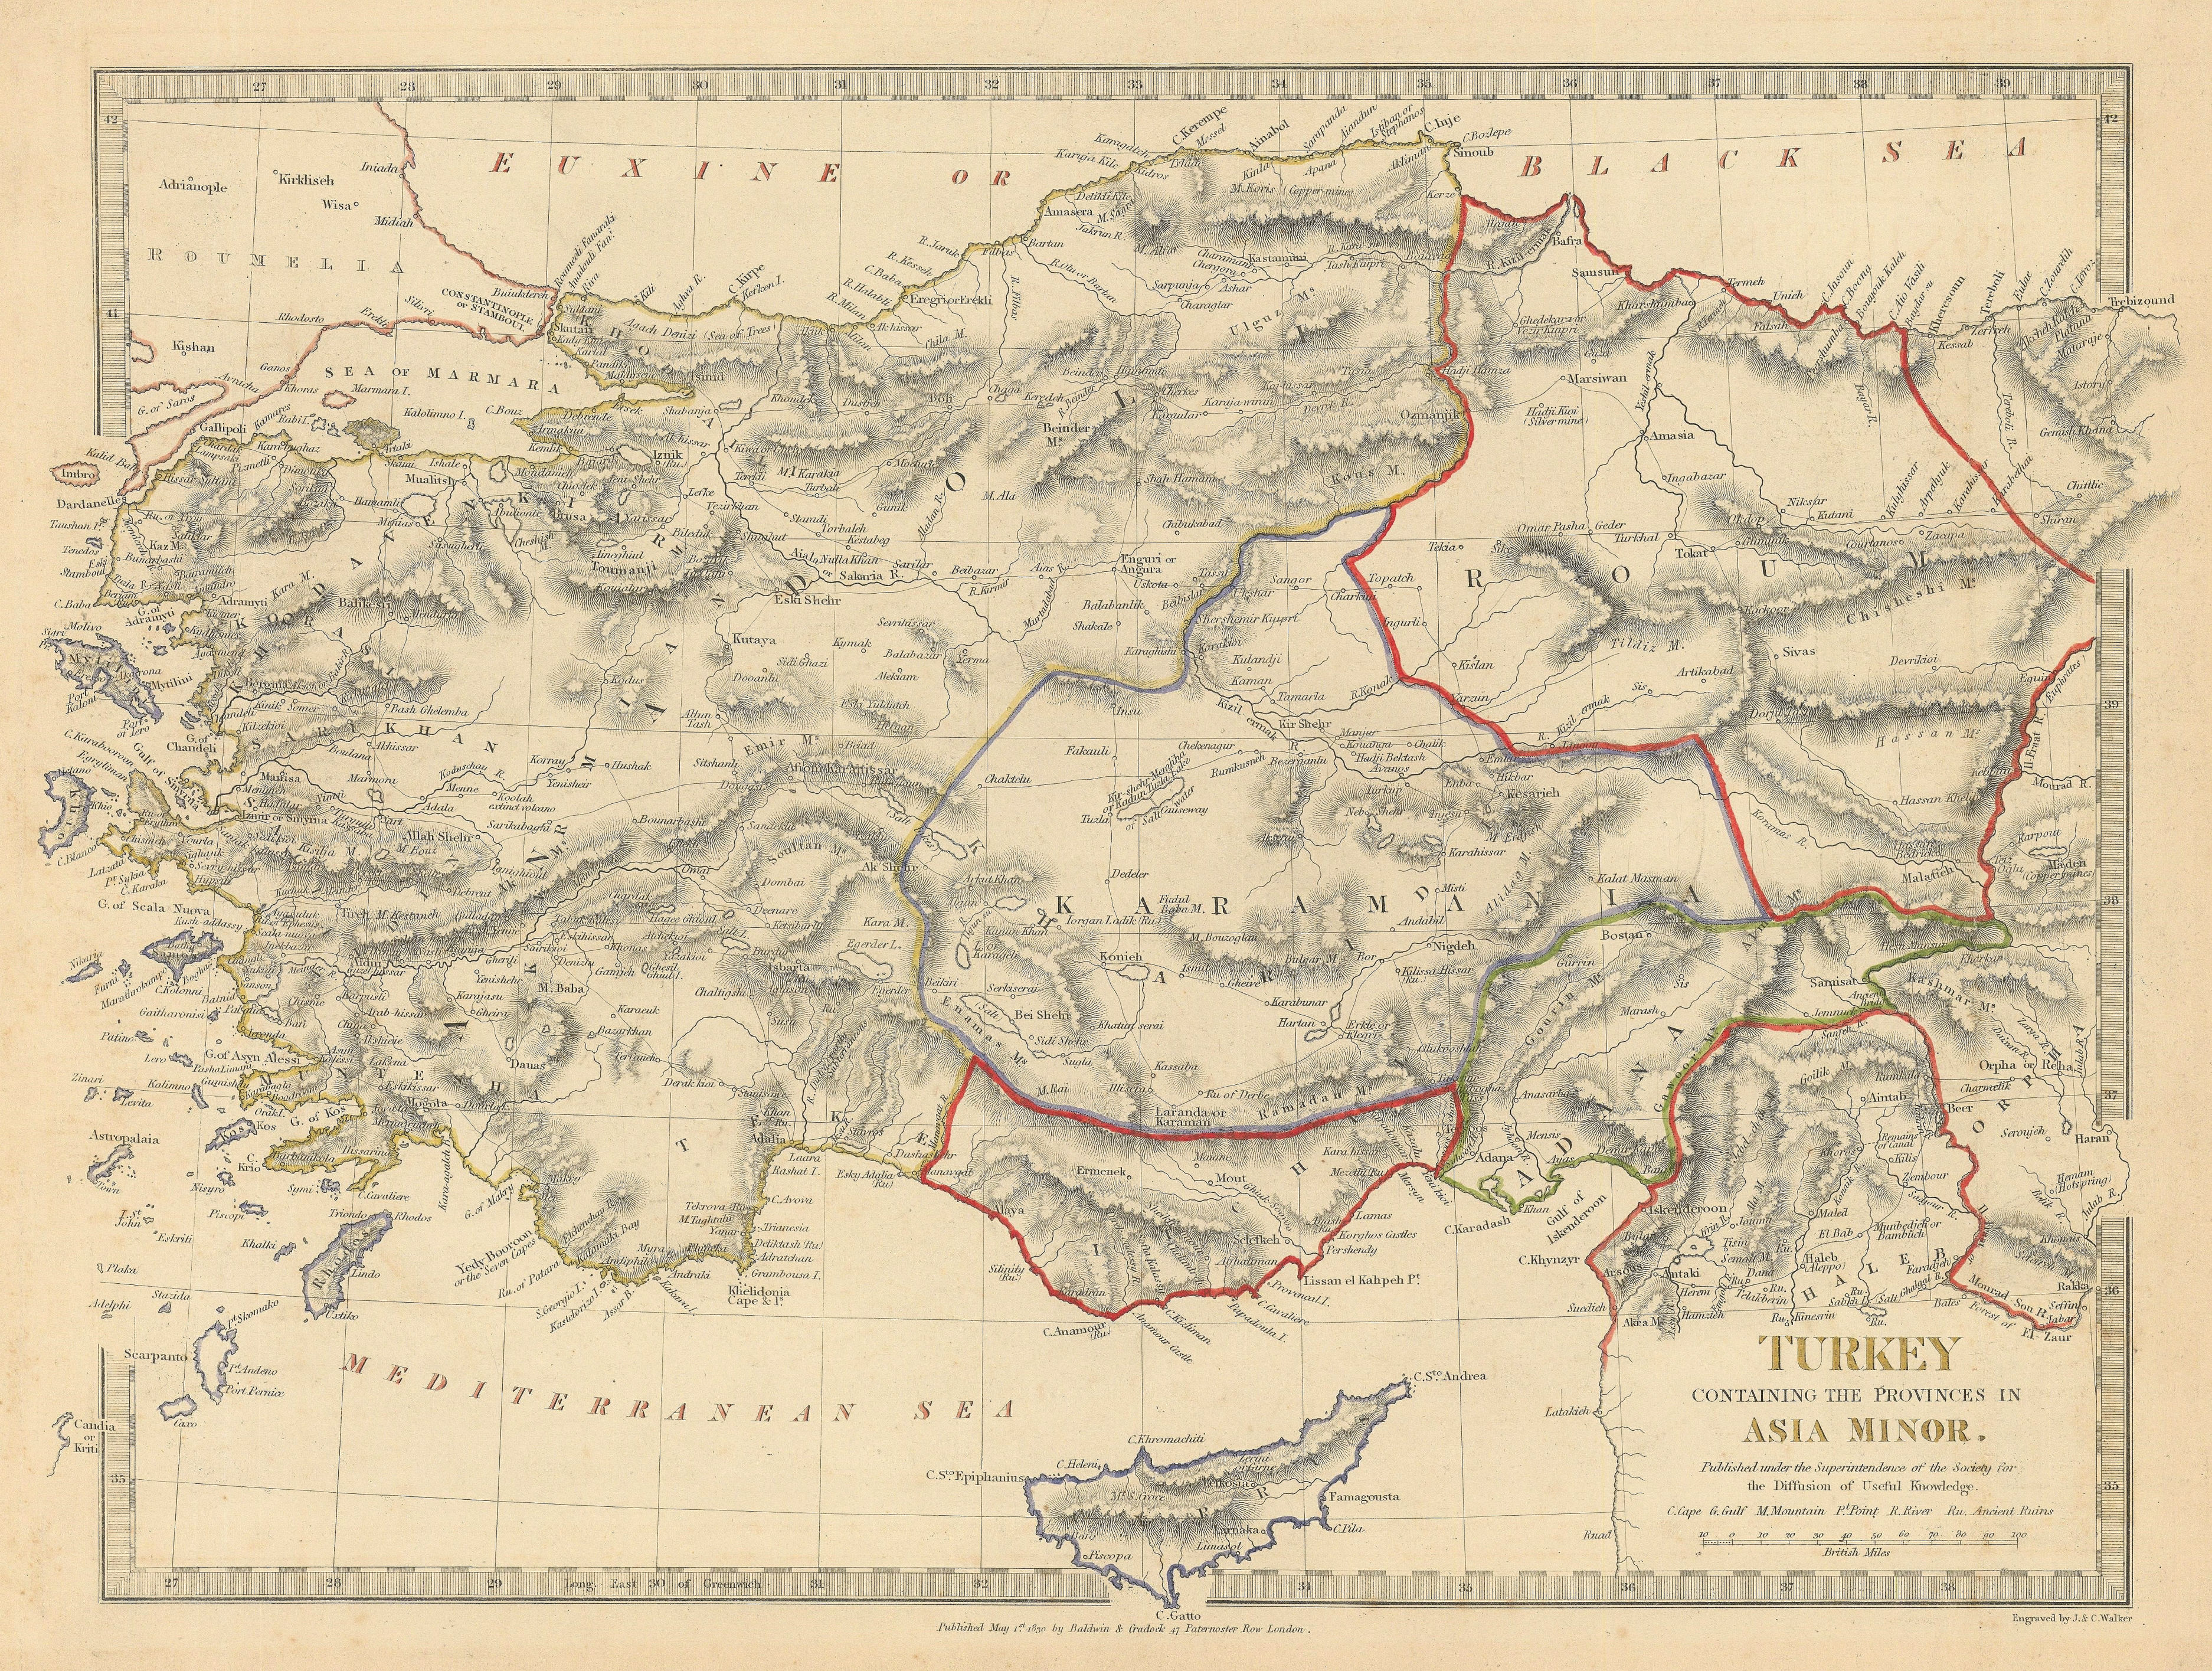 Associate Product TURKEY. Asia Minor provinces. Karamania Adana Itchi Roum. SDUK 1844 old map